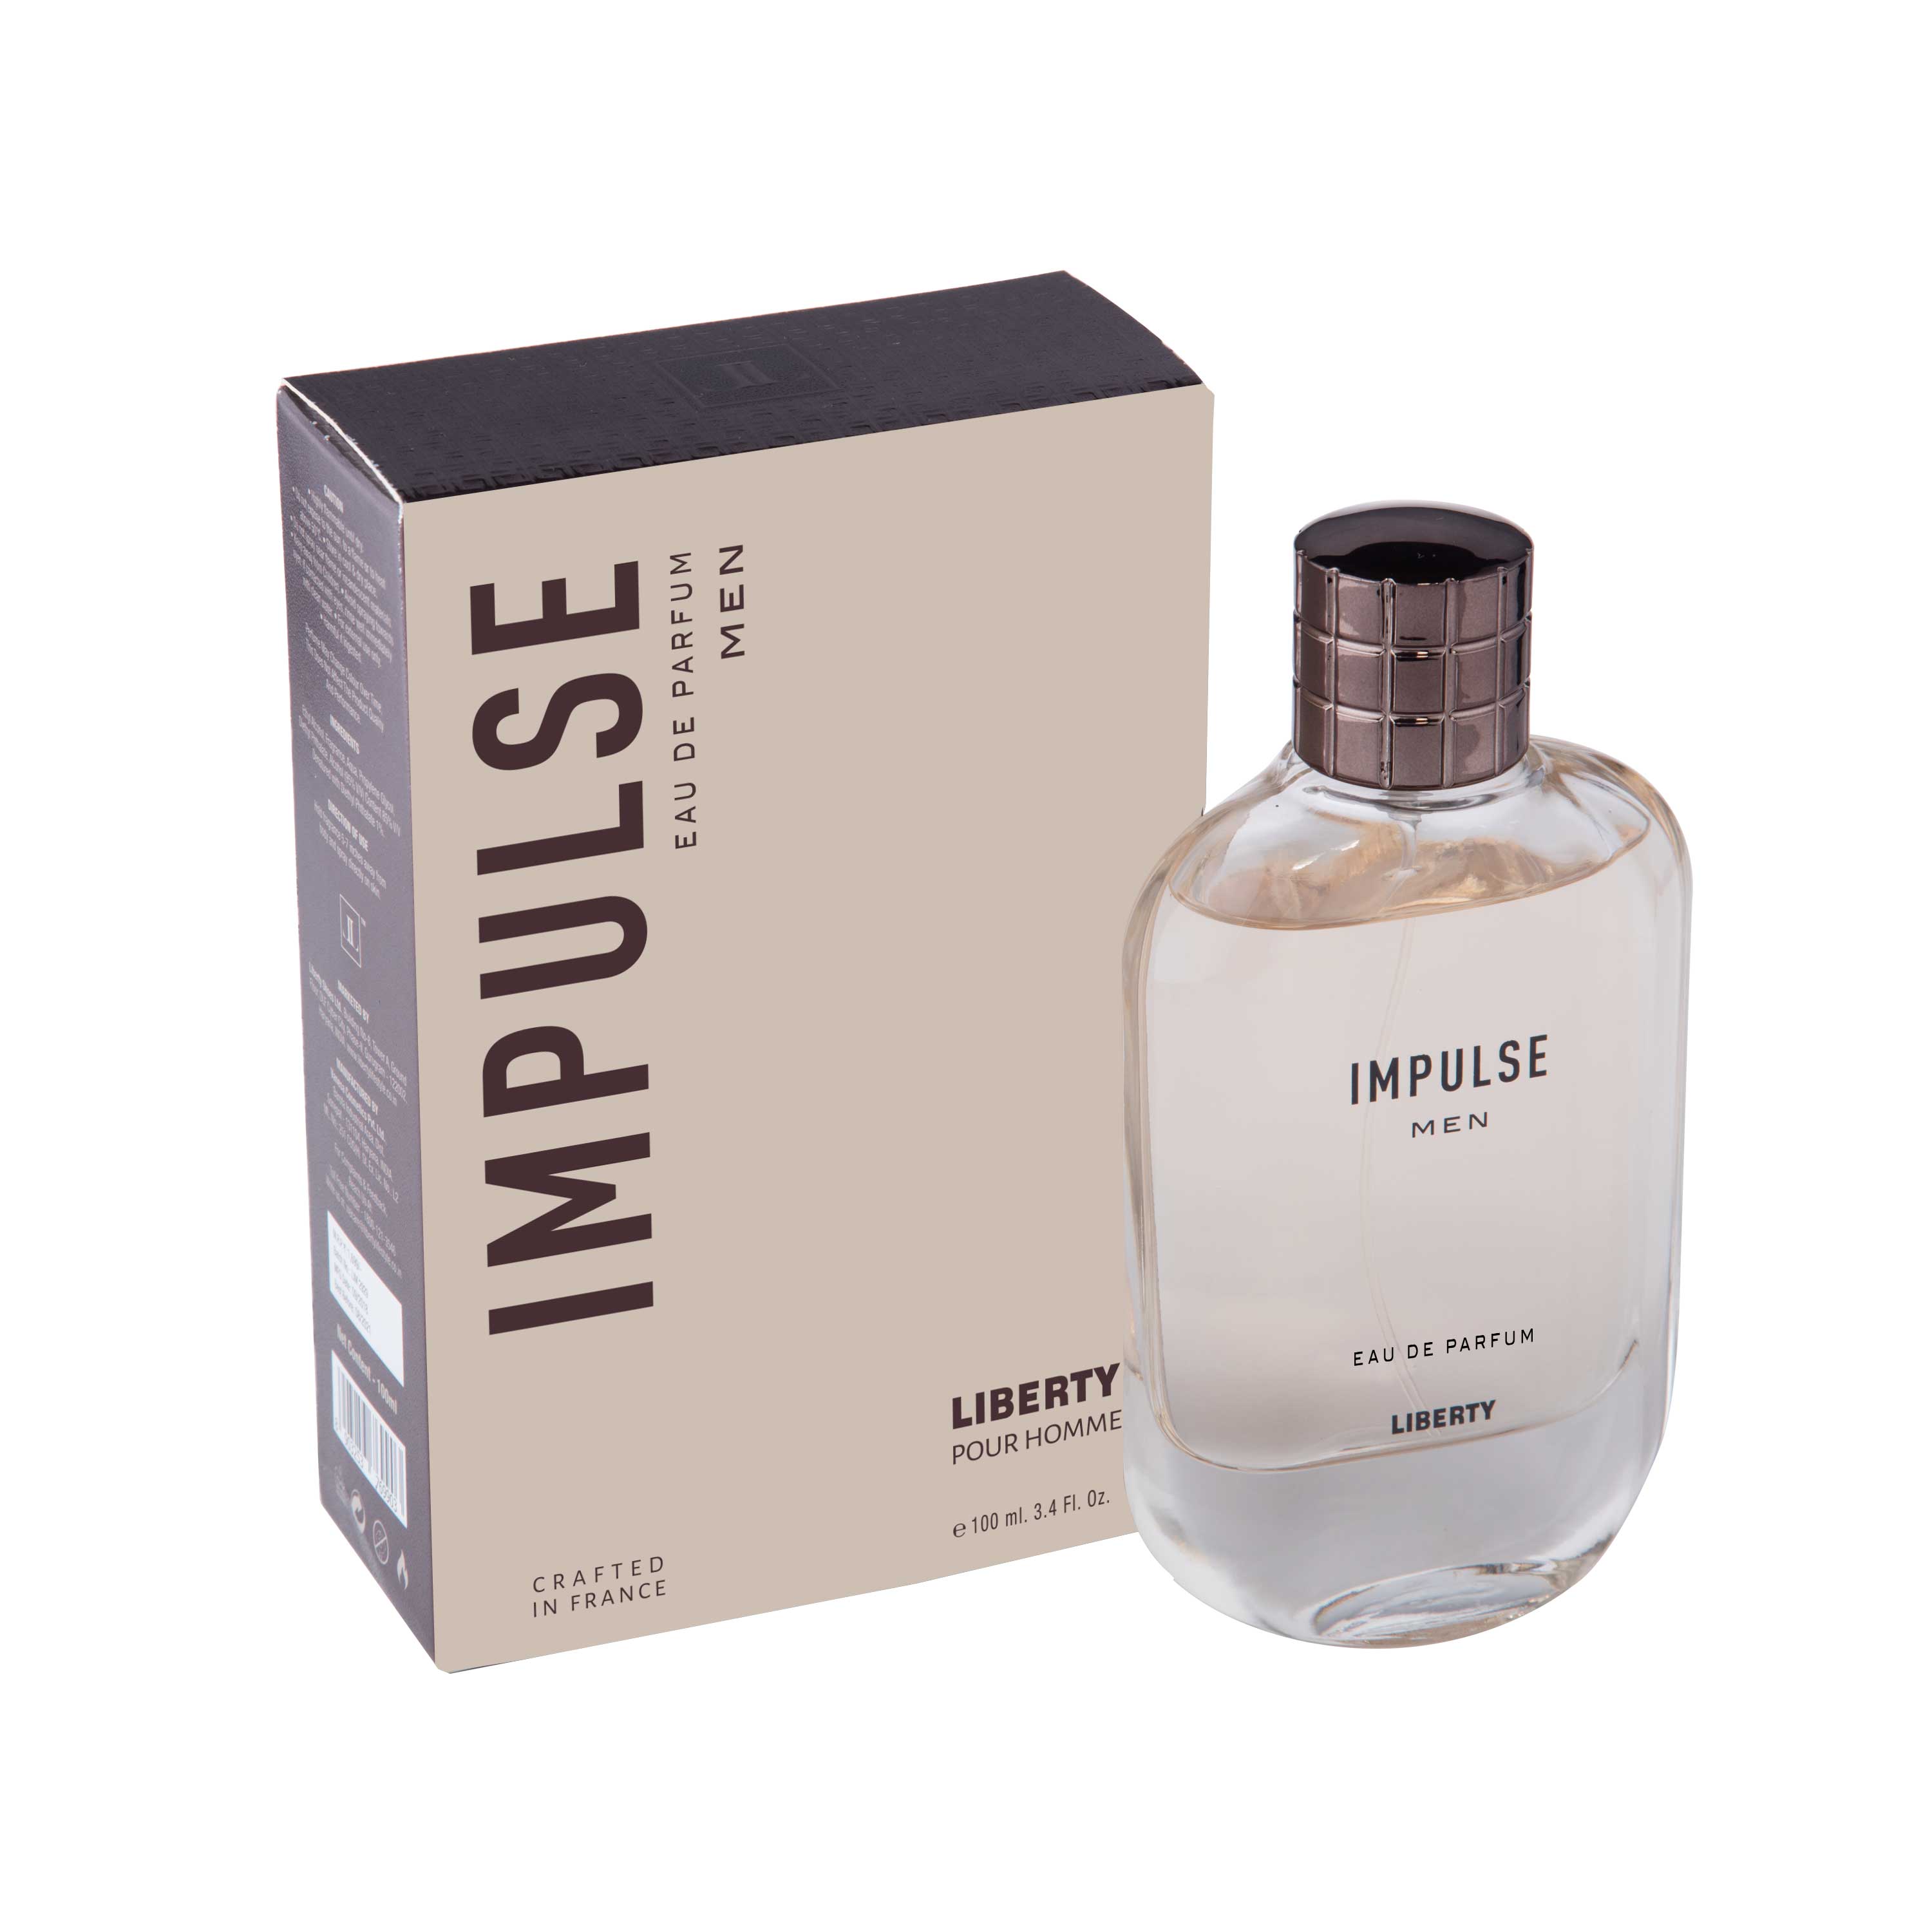 IMPULSE MEN - Eau De Perfume from LIBERTY LIFESTYLE